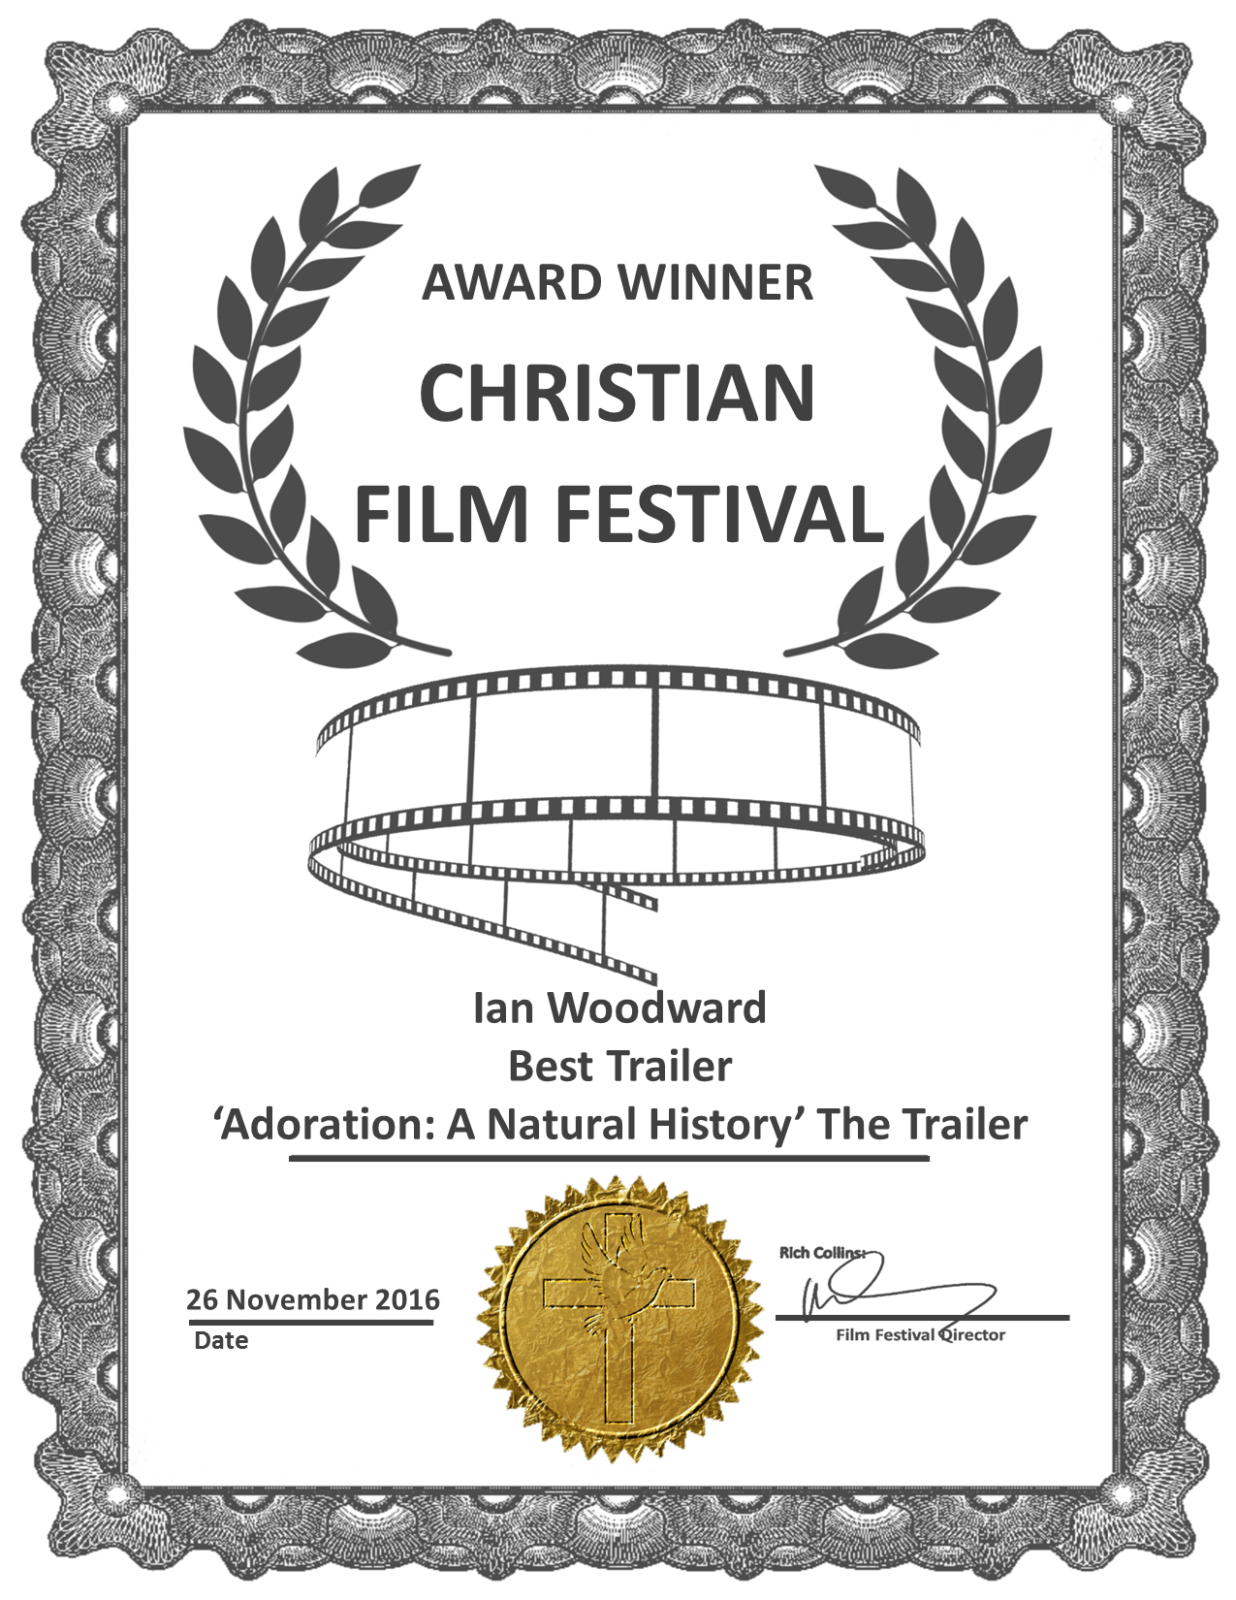 adoration-the-trailer-best-trailer-award-cff-nov-16-ian-woodward_30464337163_o